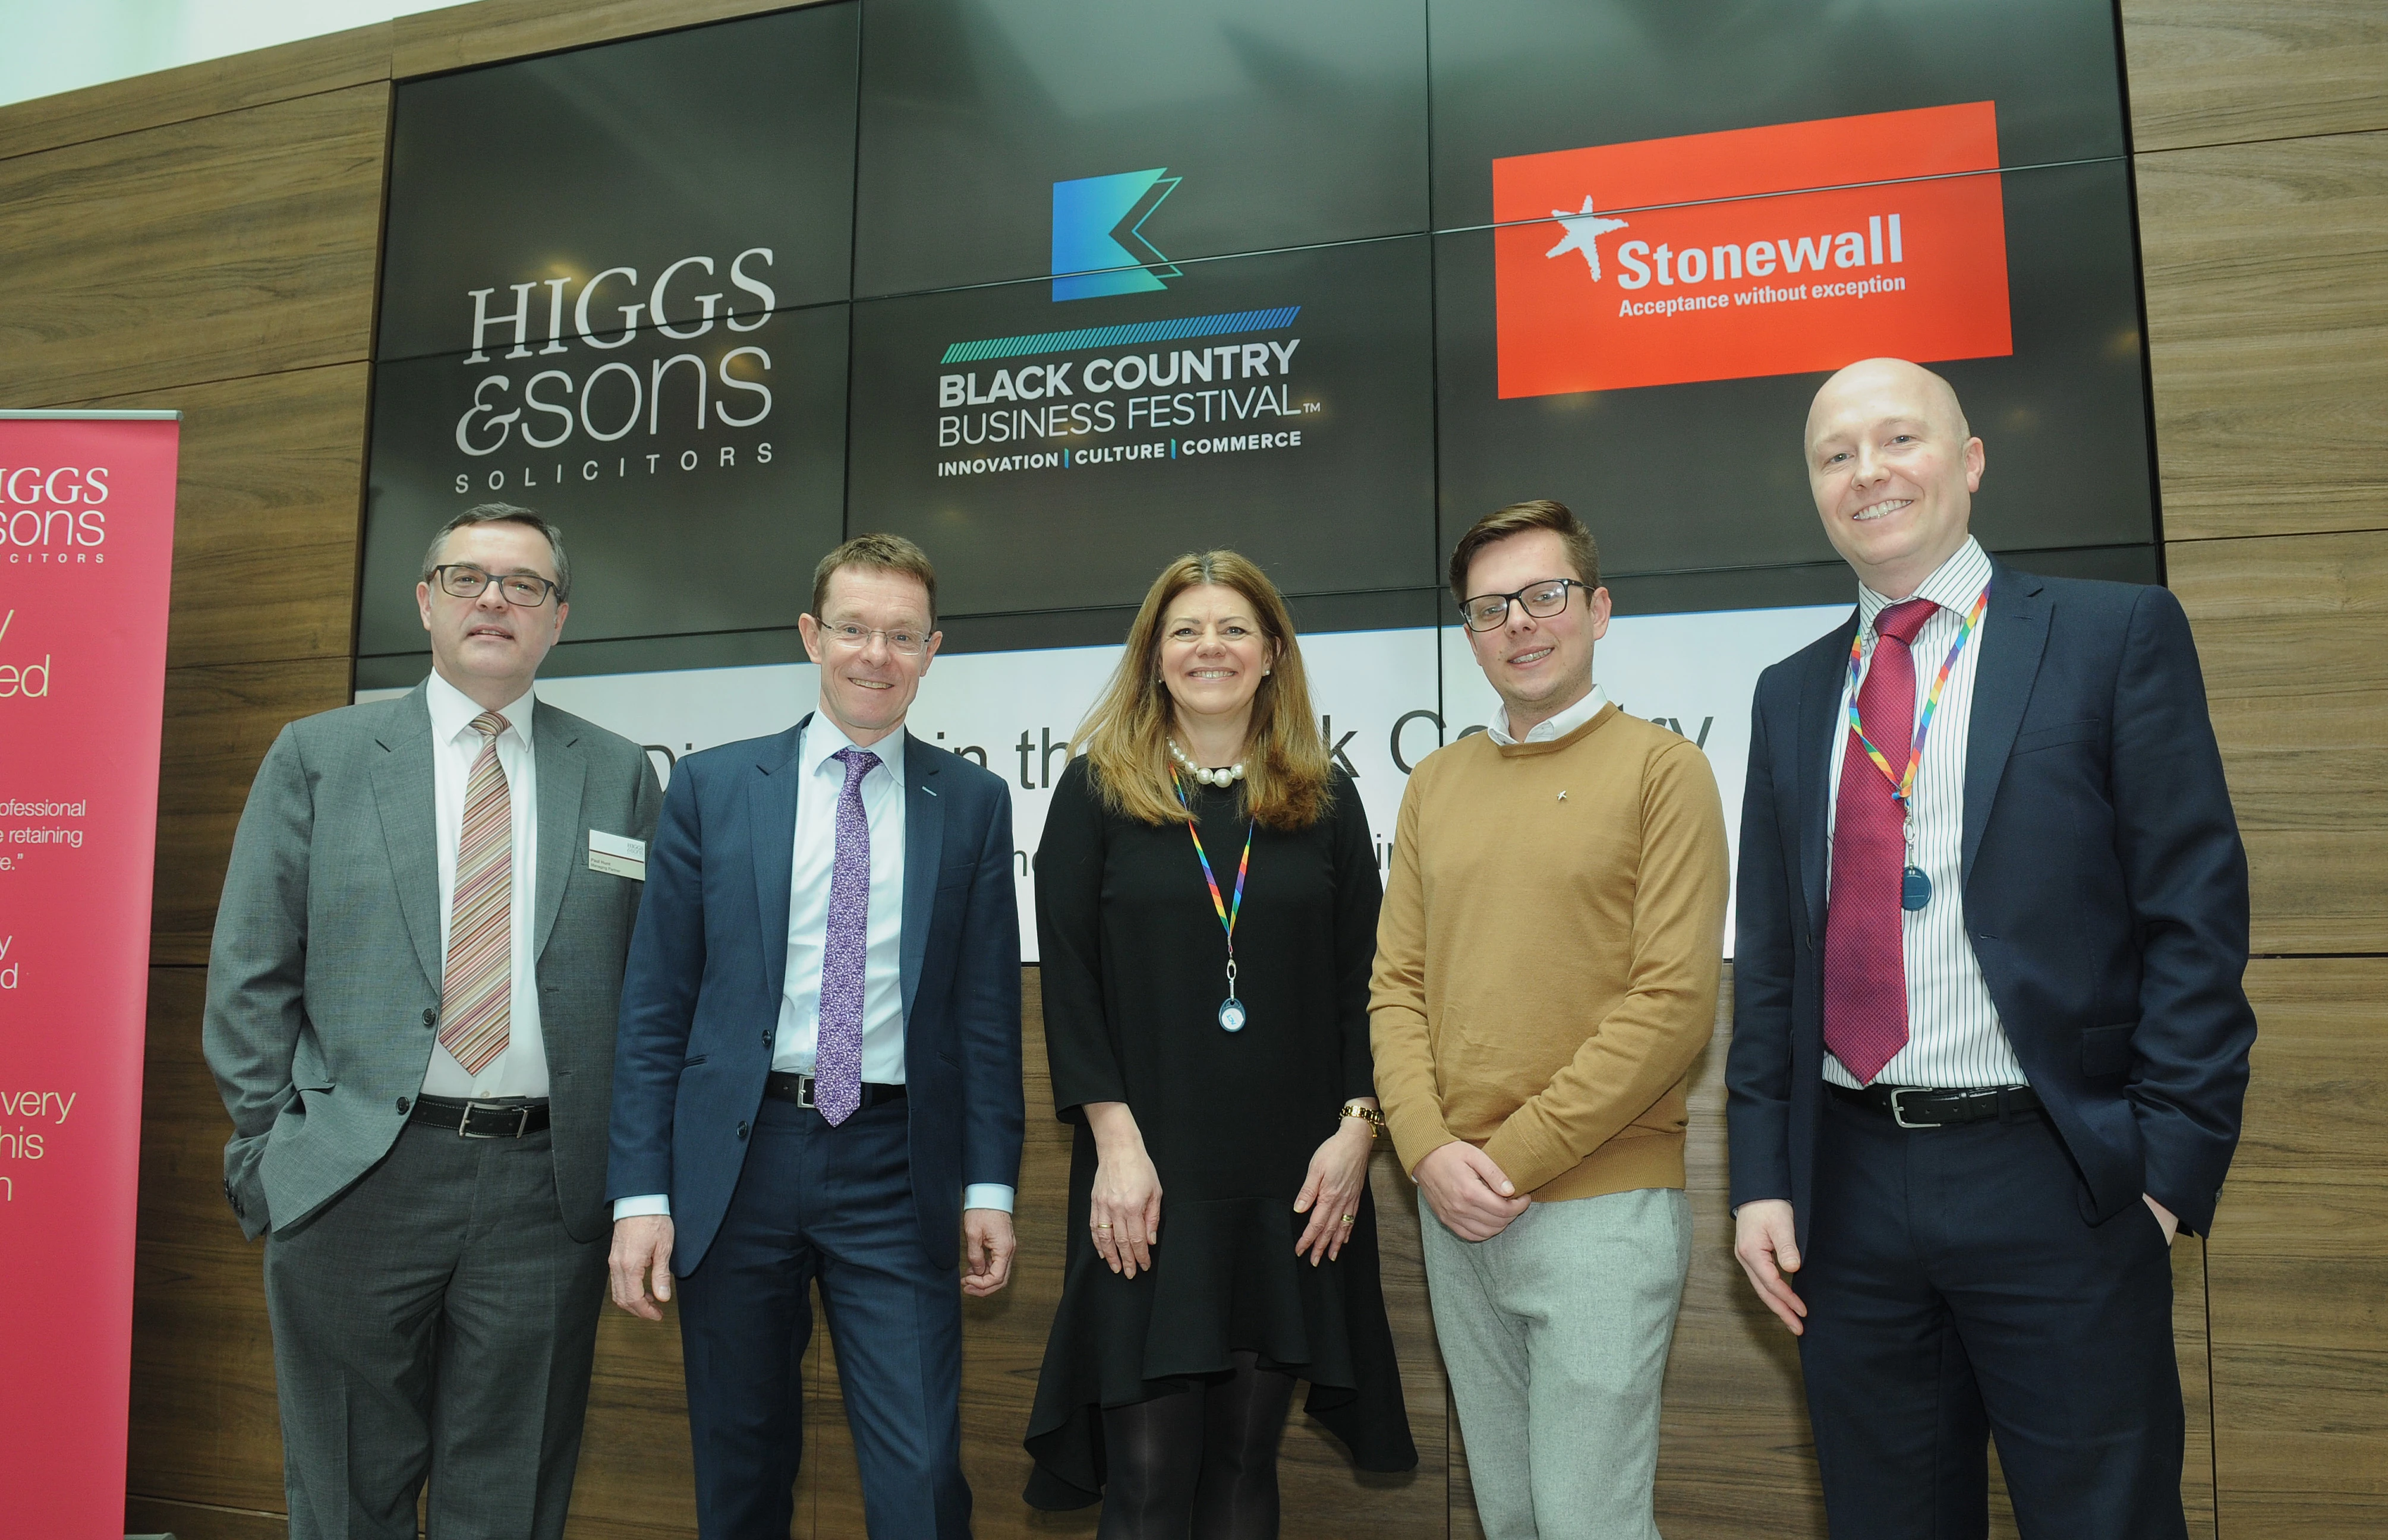 Paul Hunt, Managing Partner at Higgs & Sons; Andy Street, WMCA Mayor; Julia Lowe, Partner at Higgs; Reece Pope of Stonewall and Paul Barker, Partner at Higgs.